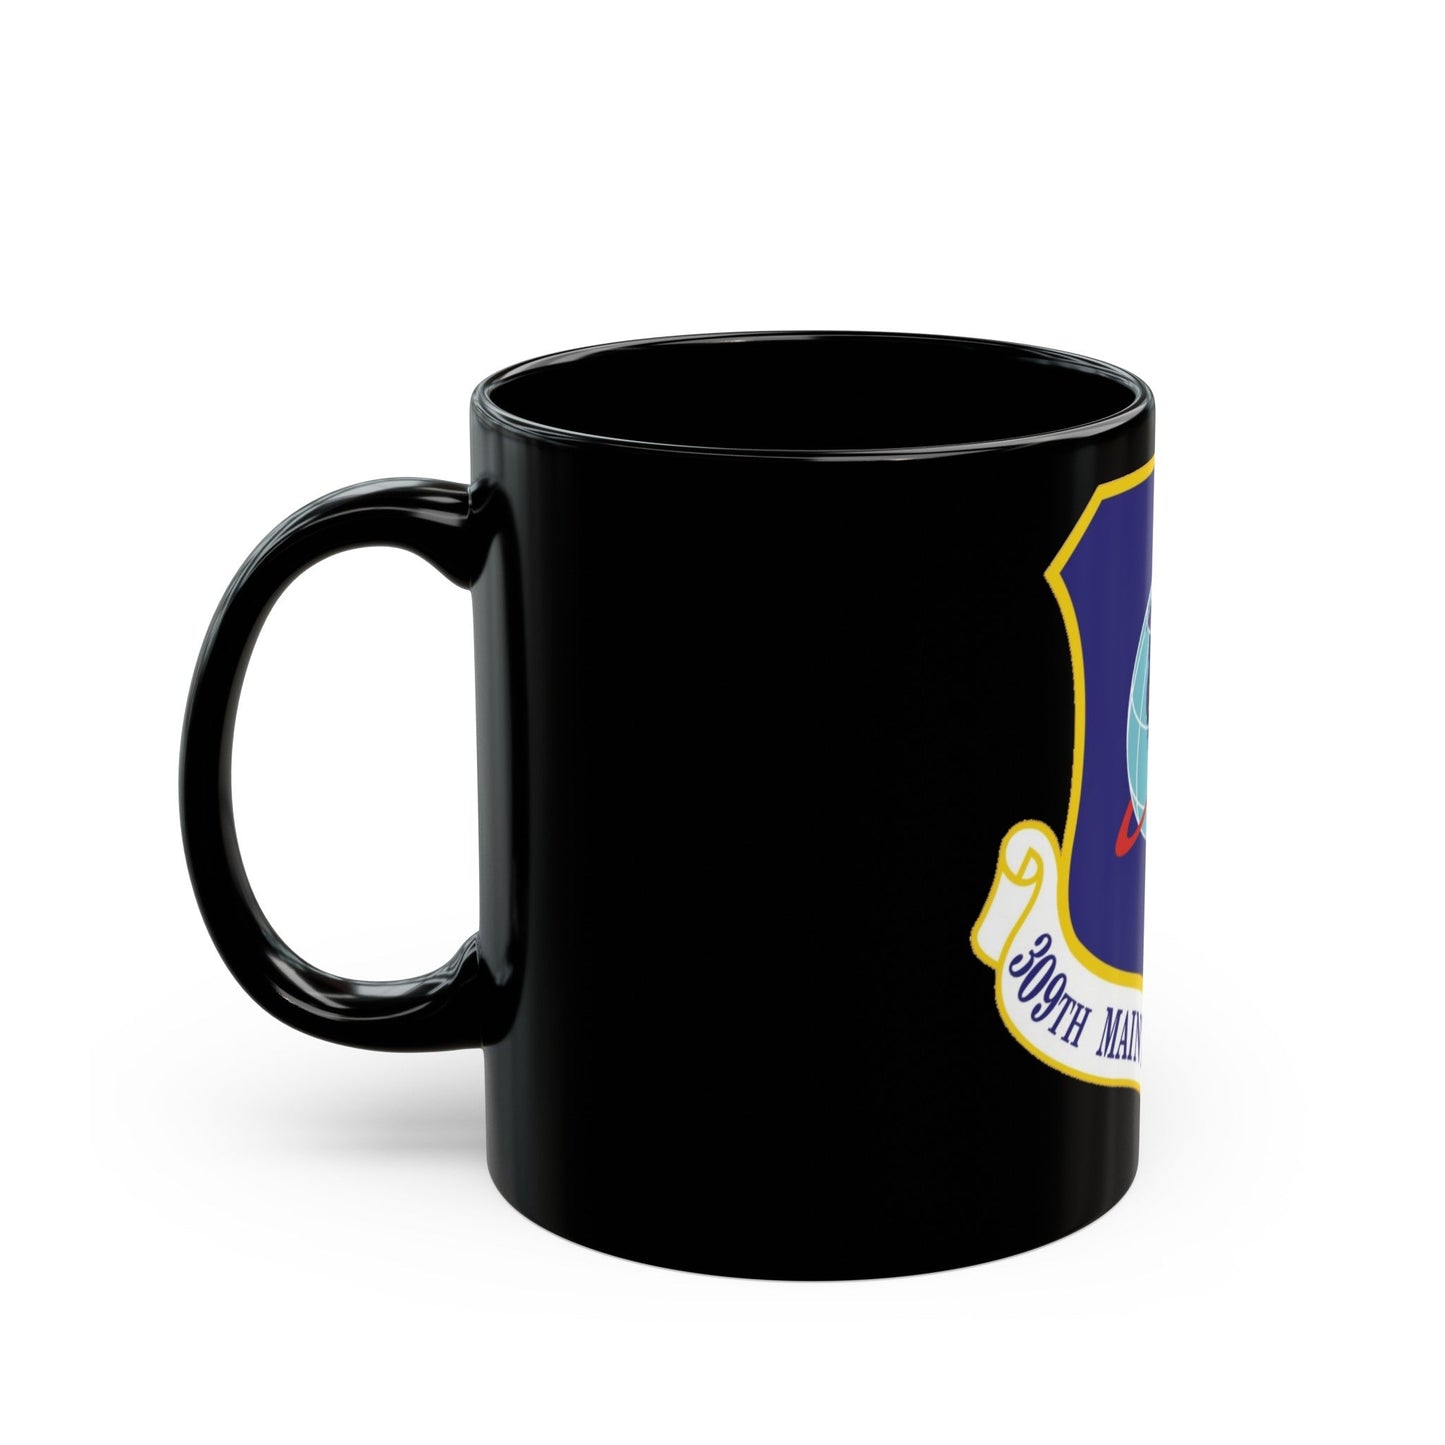 309th Maintenance Wing (U.S. Air Force) Black Coffee Mug